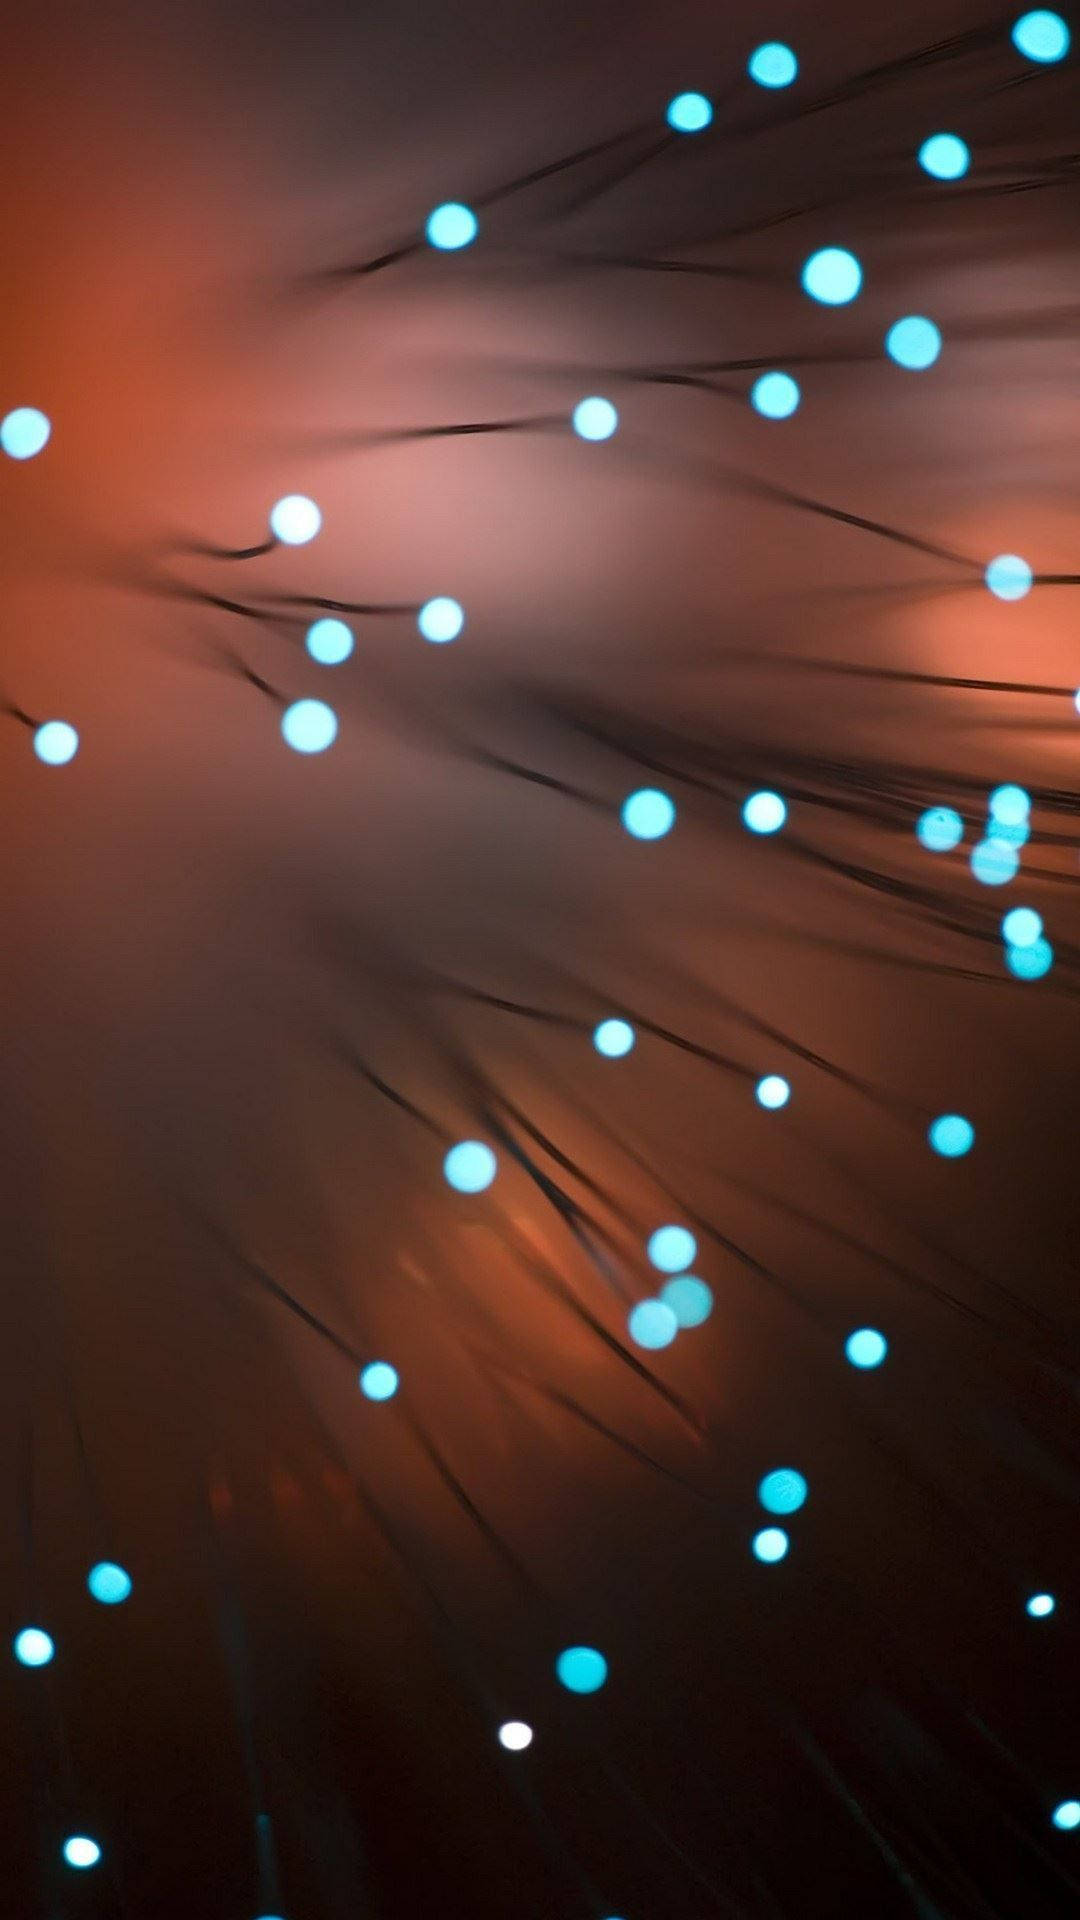 Stunning Bioluminescent Coral Display On Hd Phone Screen